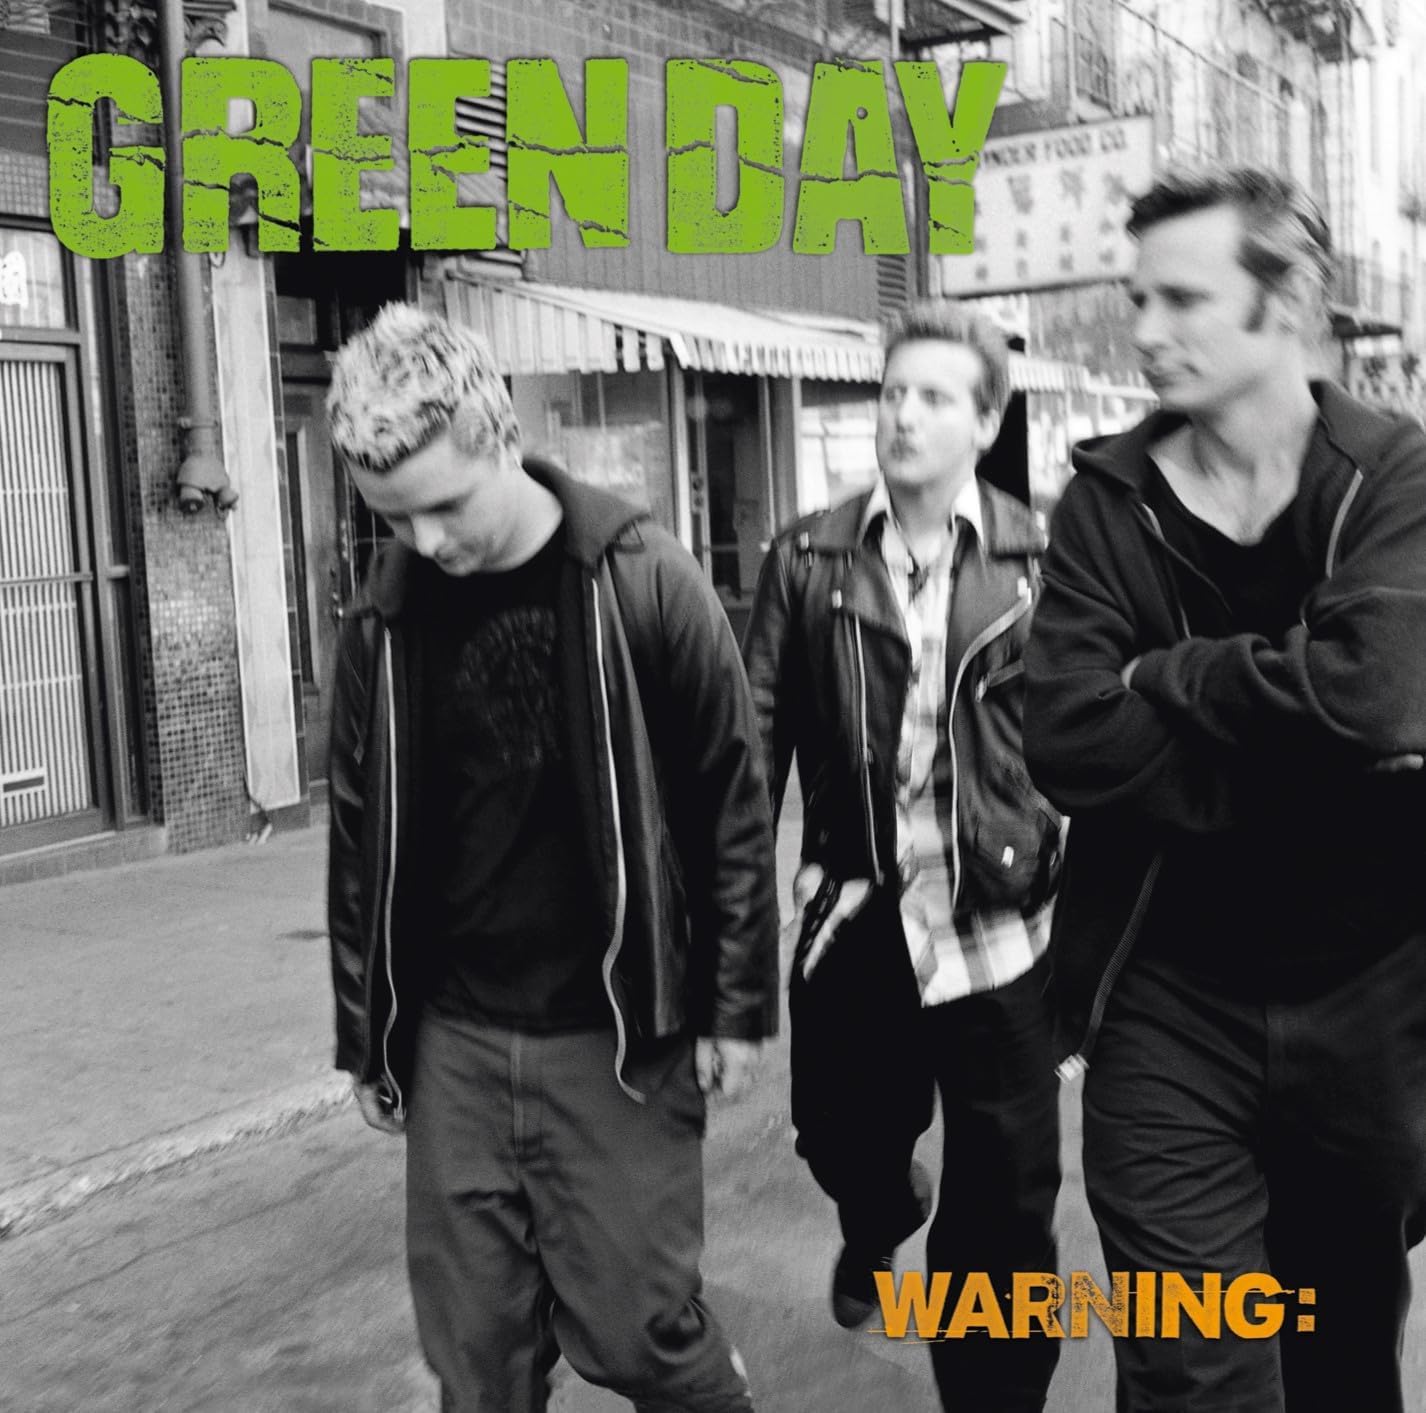 Green Day - Warning (Limited Edition, Green Vinyl) (LP) - Joco Records